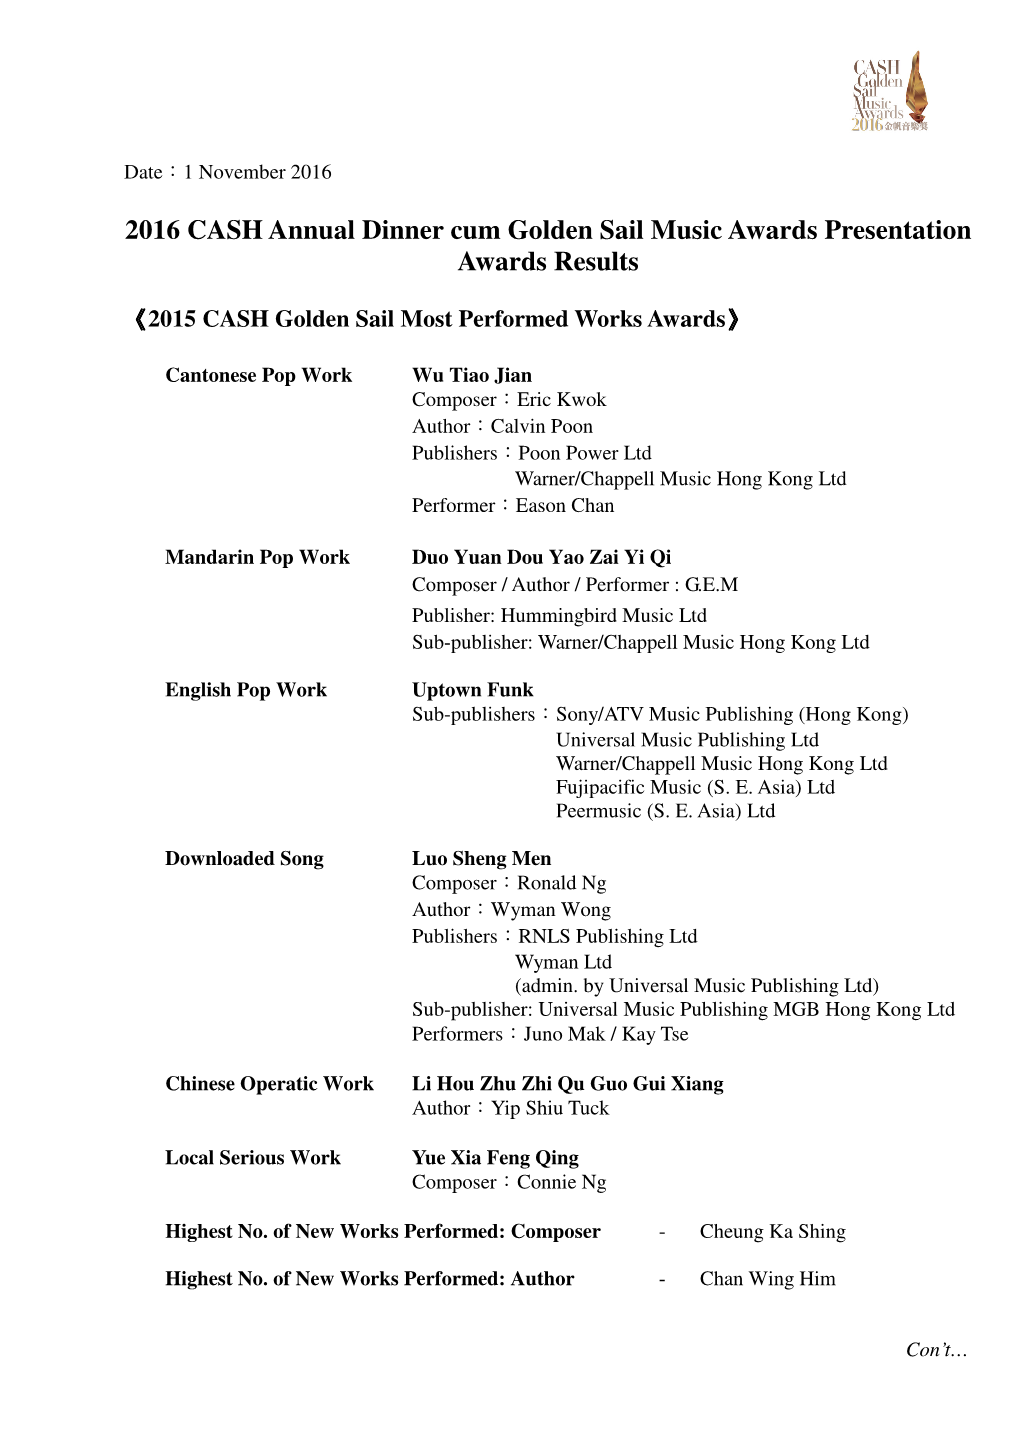 2016 CASH Annual Dinner Cum Golden Sail Music Awards Presentation Awards Results